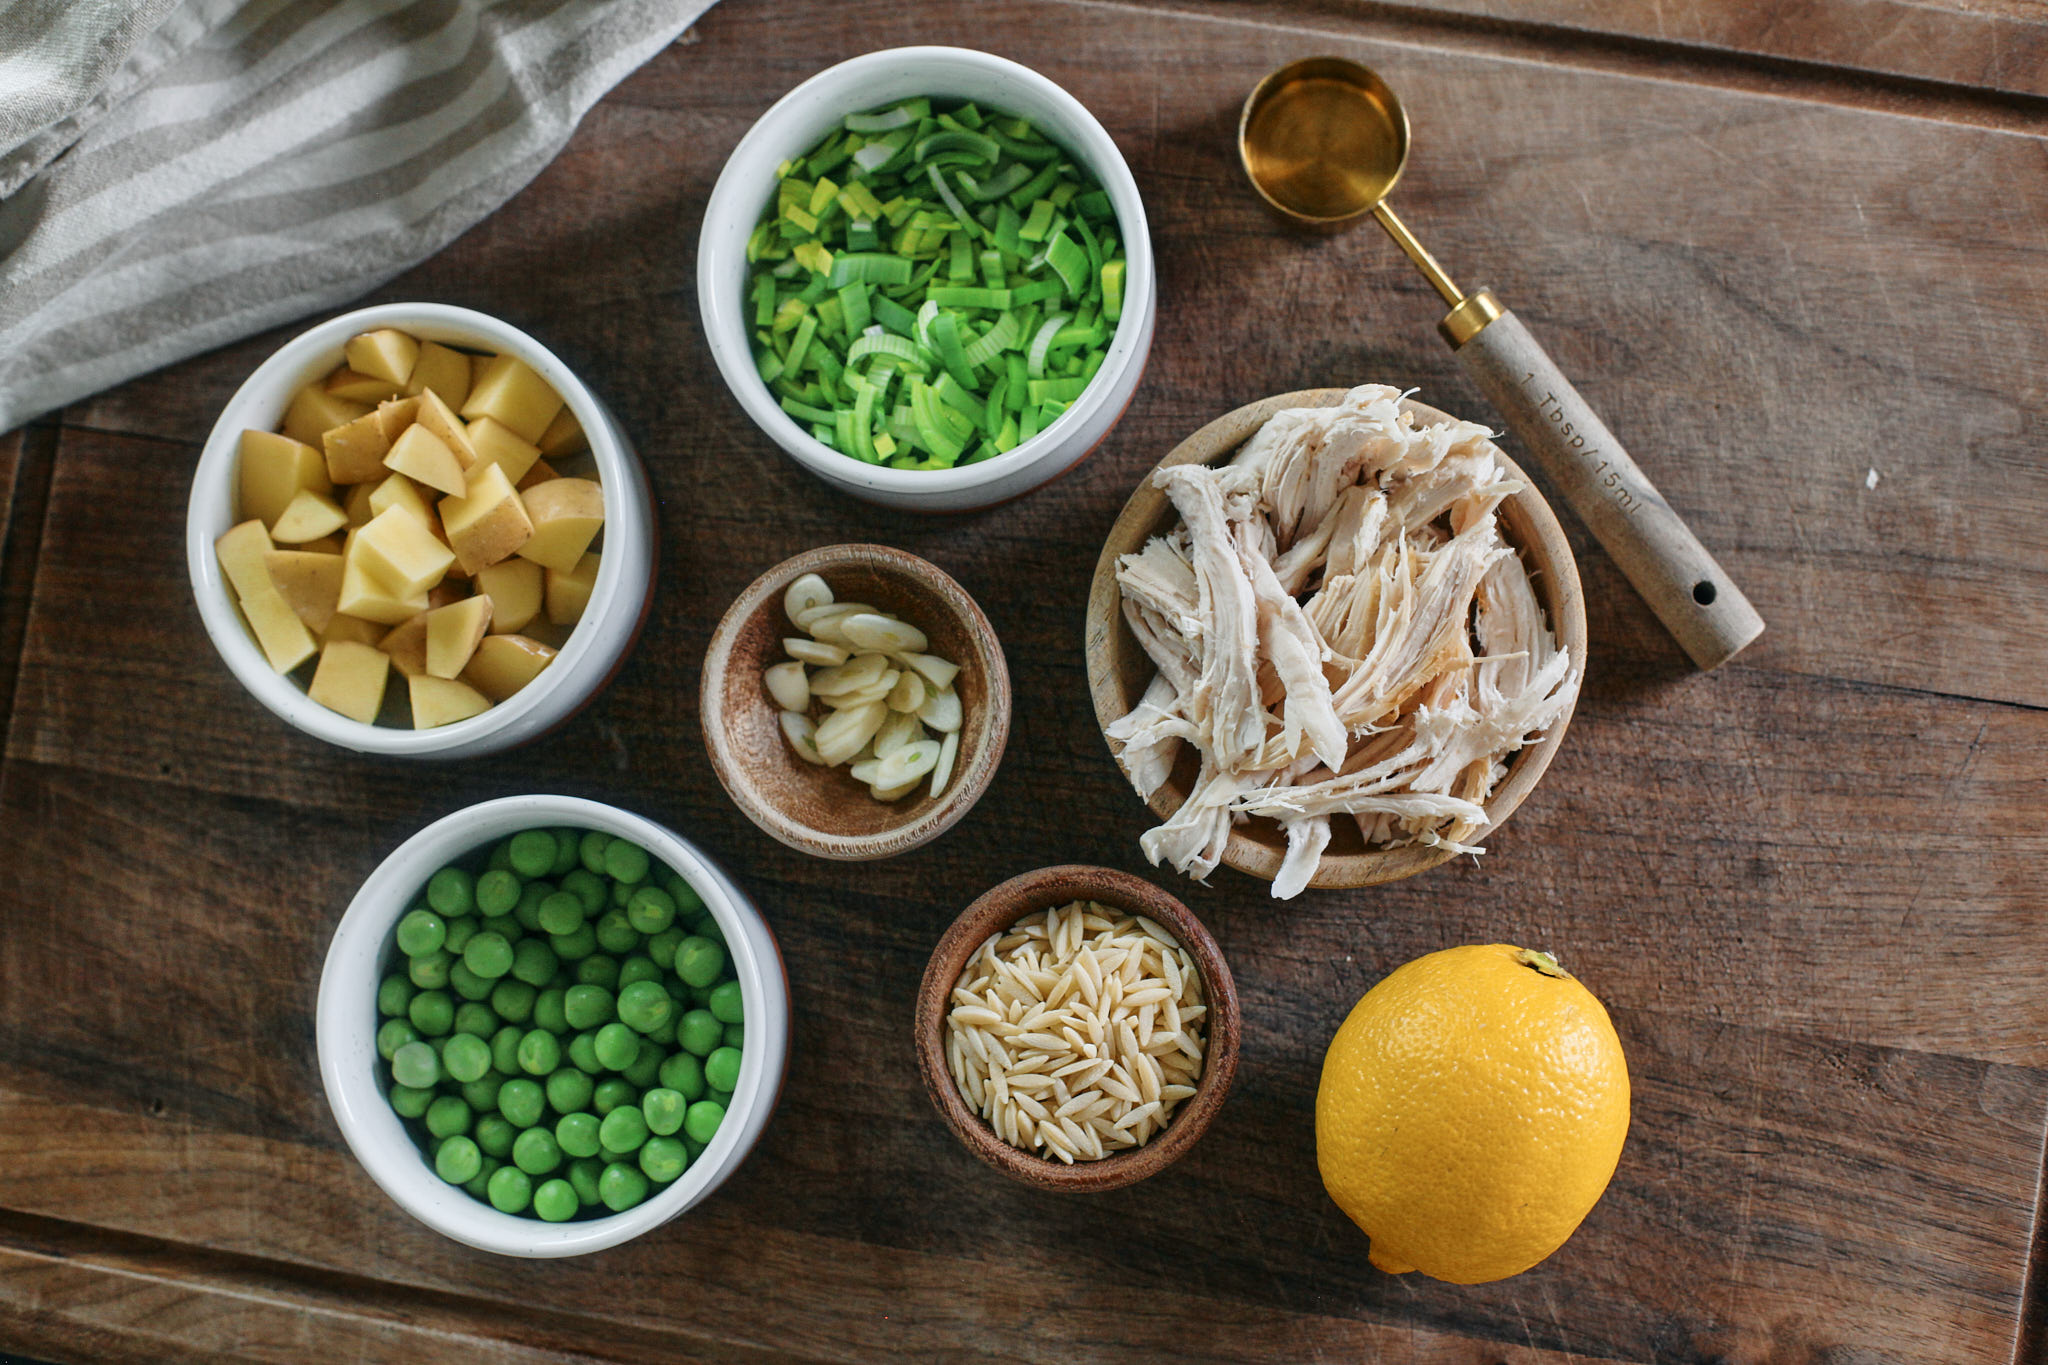 prep for the soup: chopped leek, potatoes, sliced garlic, peas, shredded chicken and lemon